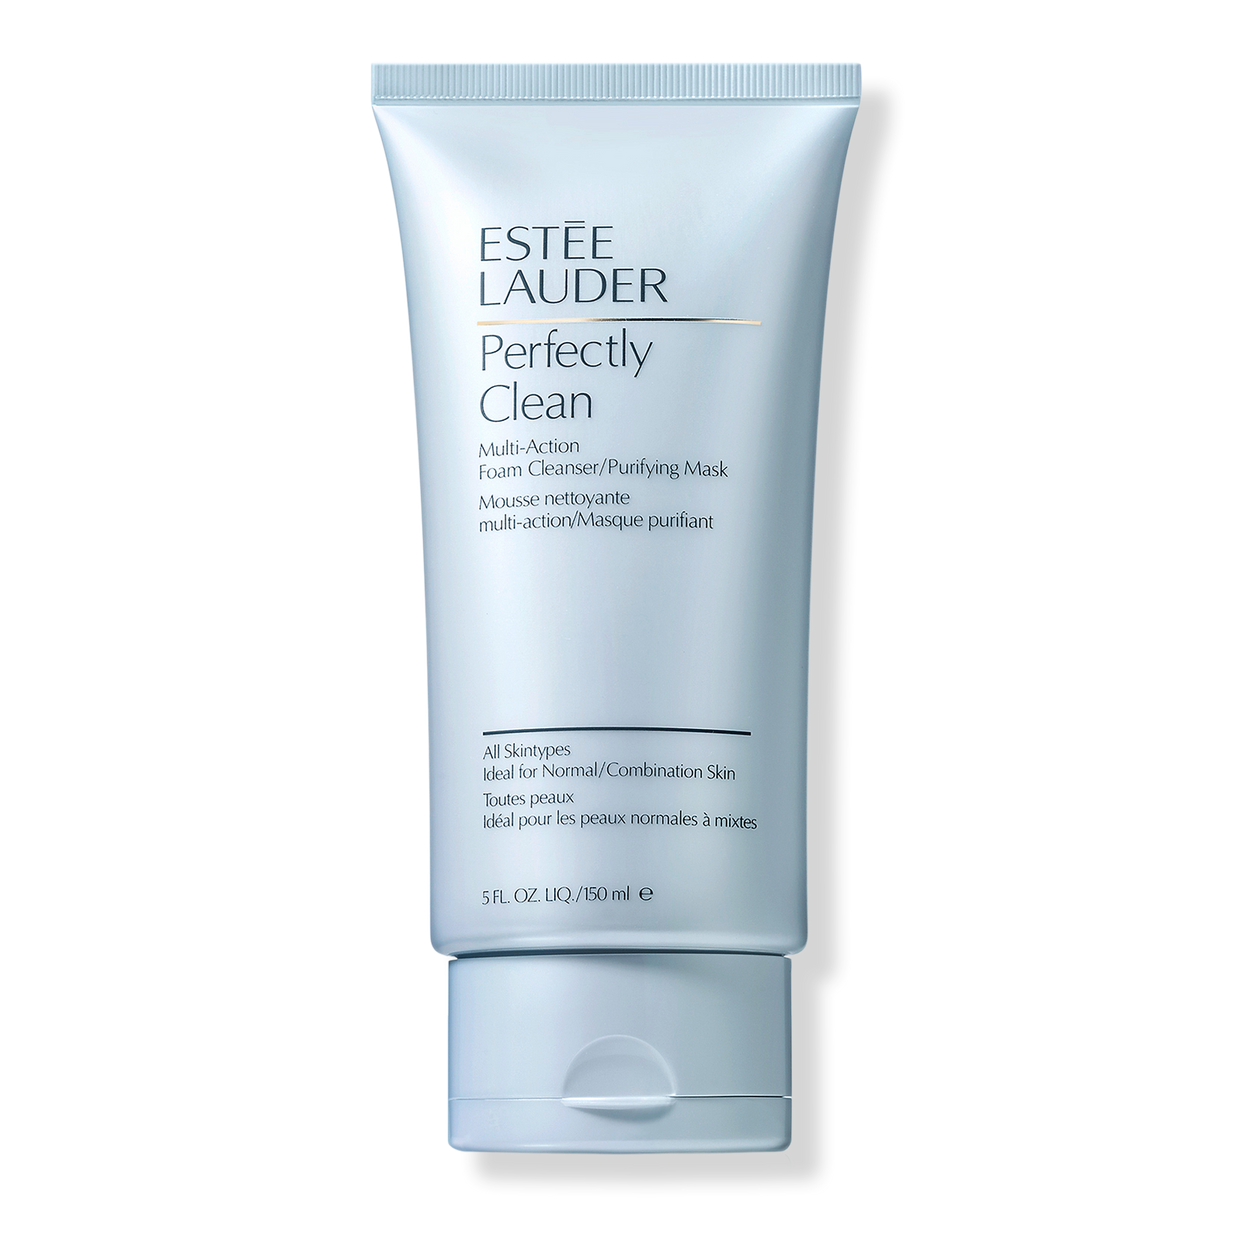 Perfectly Clean Multi-Action Foam Cleanser/Purifying Mask - Estée Lauder |  Ulta Beauty